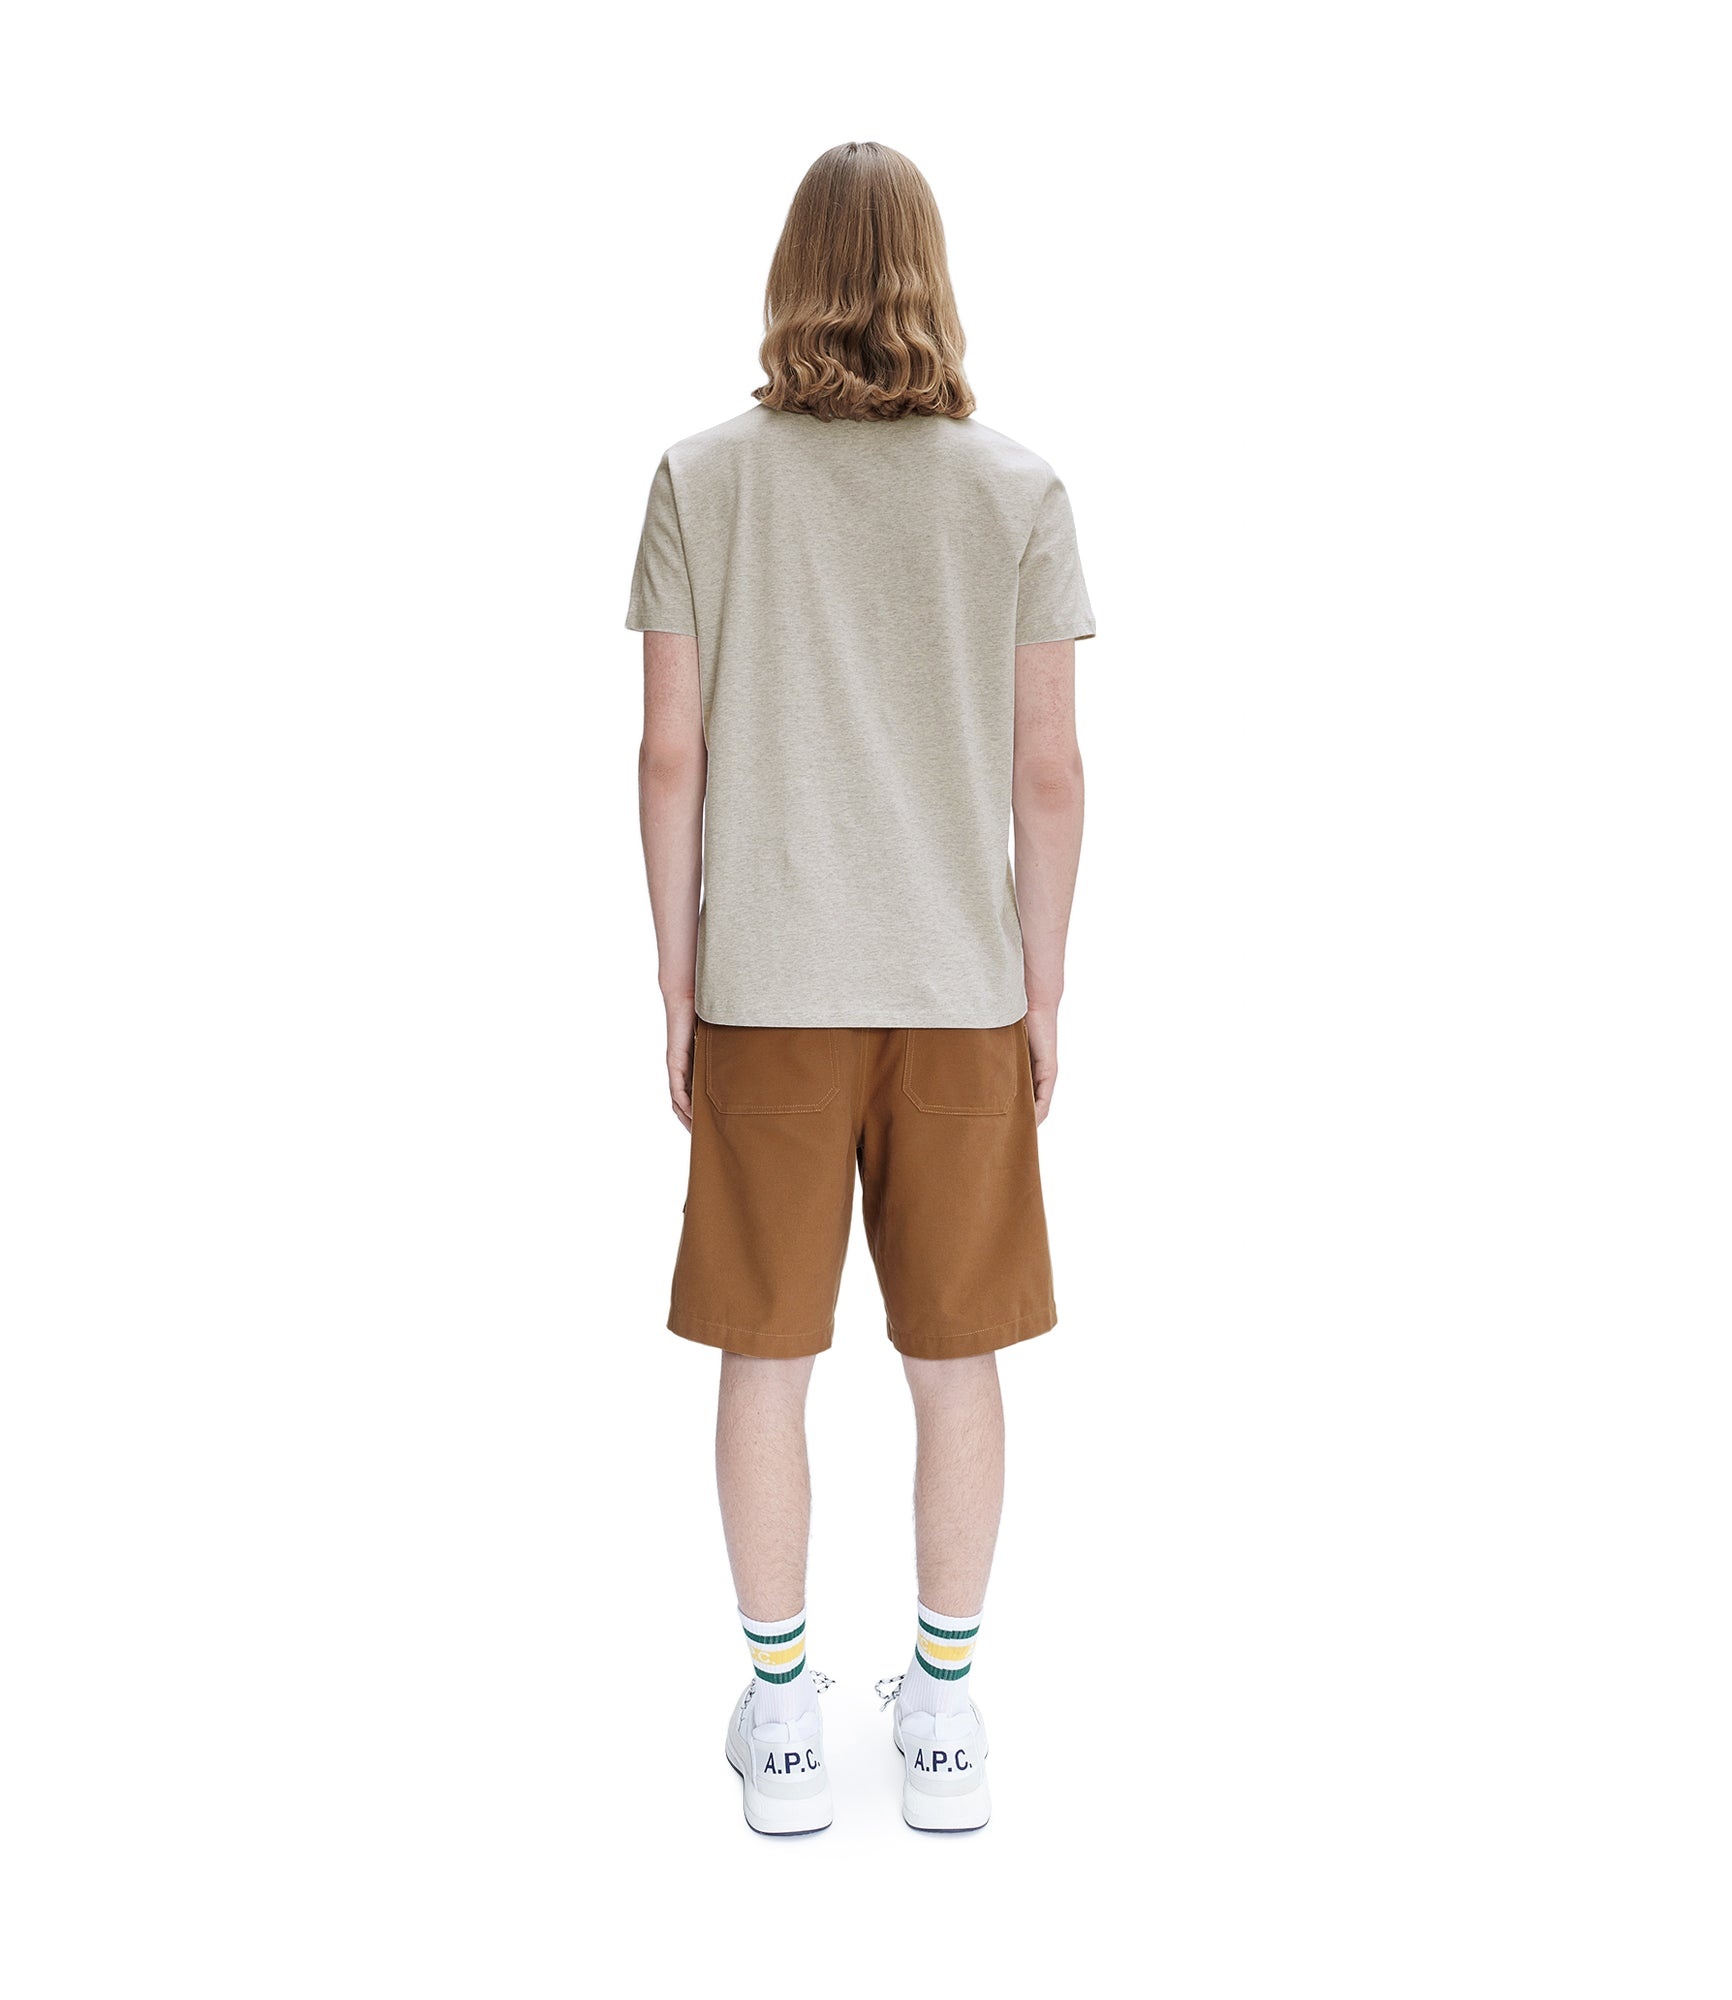 Melbourne shorts - 3